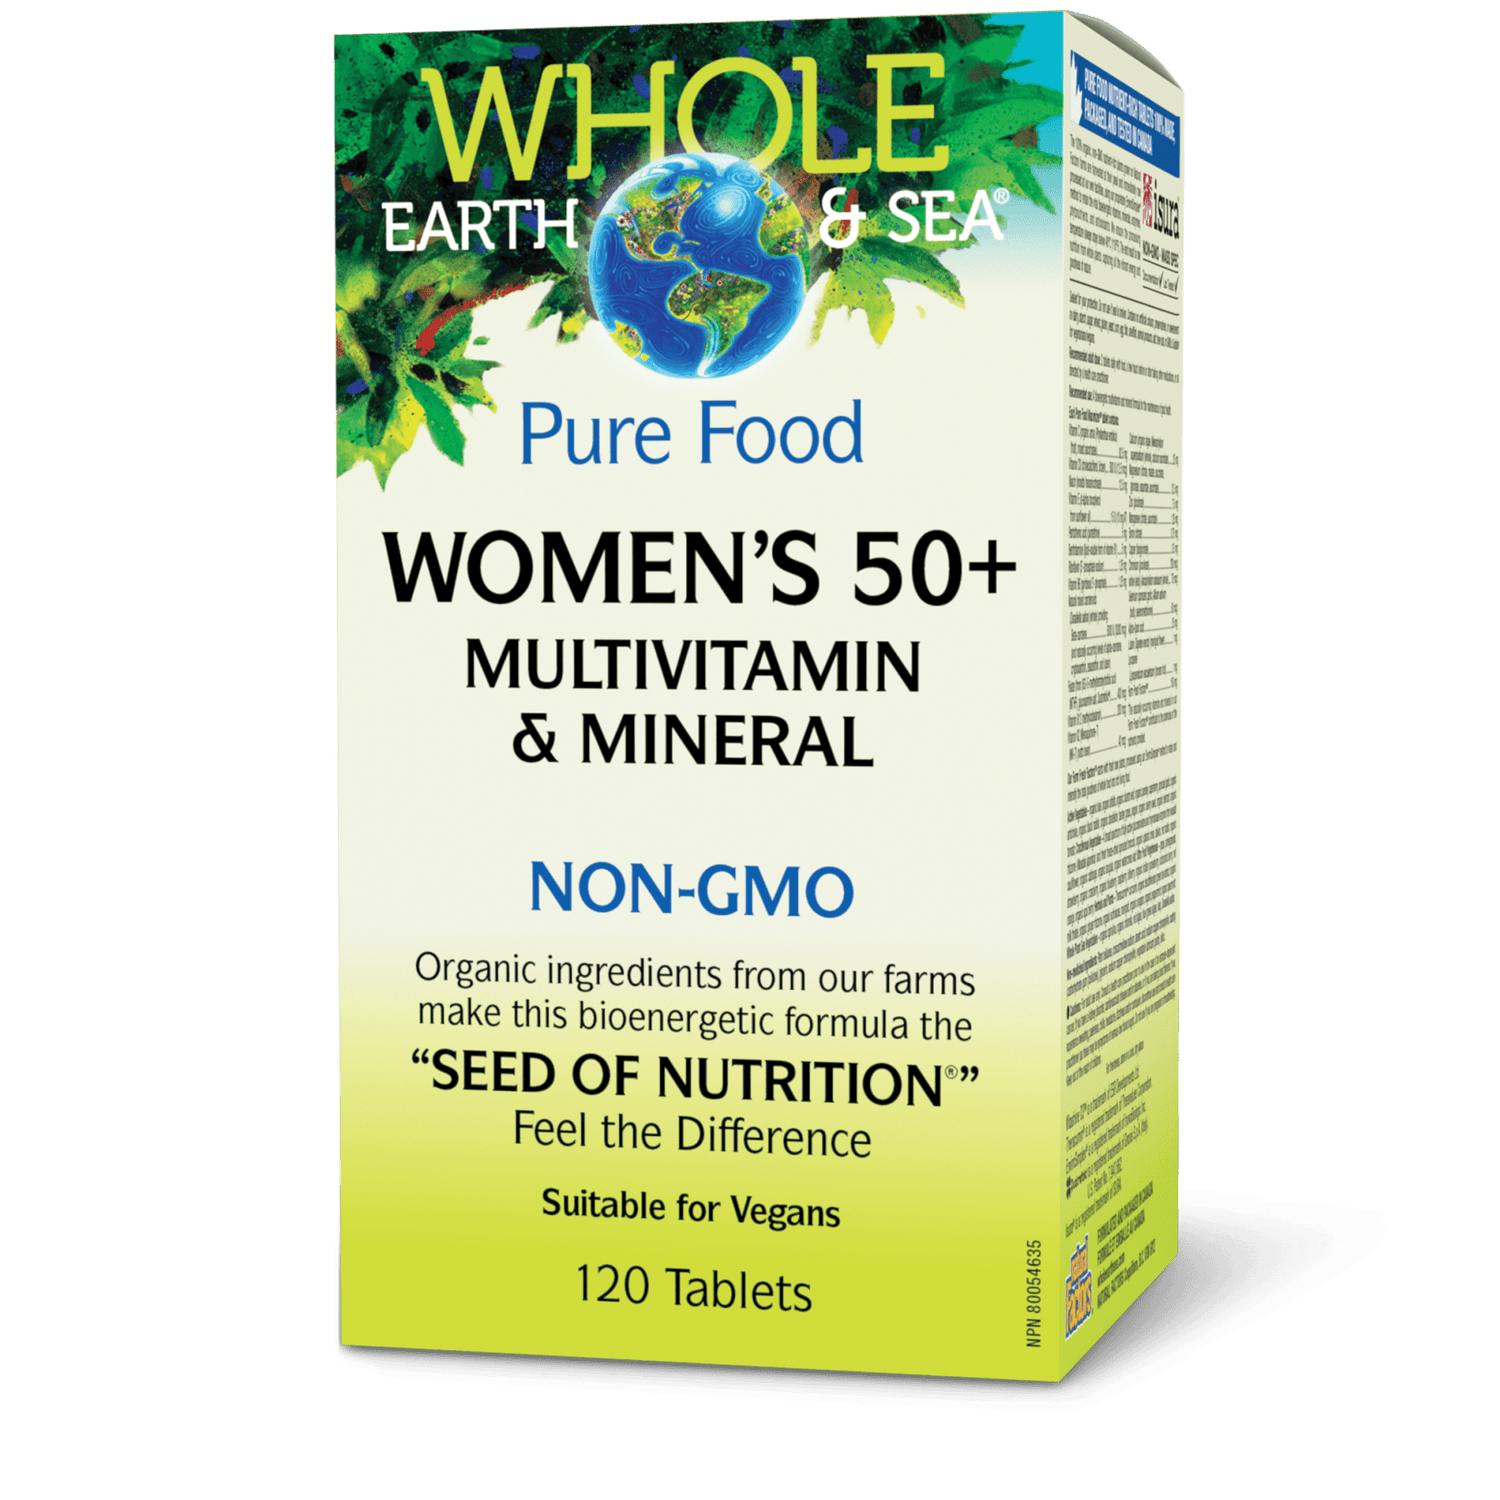 Women’s 50+ Multivitamin & Mineral, Whole Earth & Sea, Whole Earth & Sea®|v|image|35519